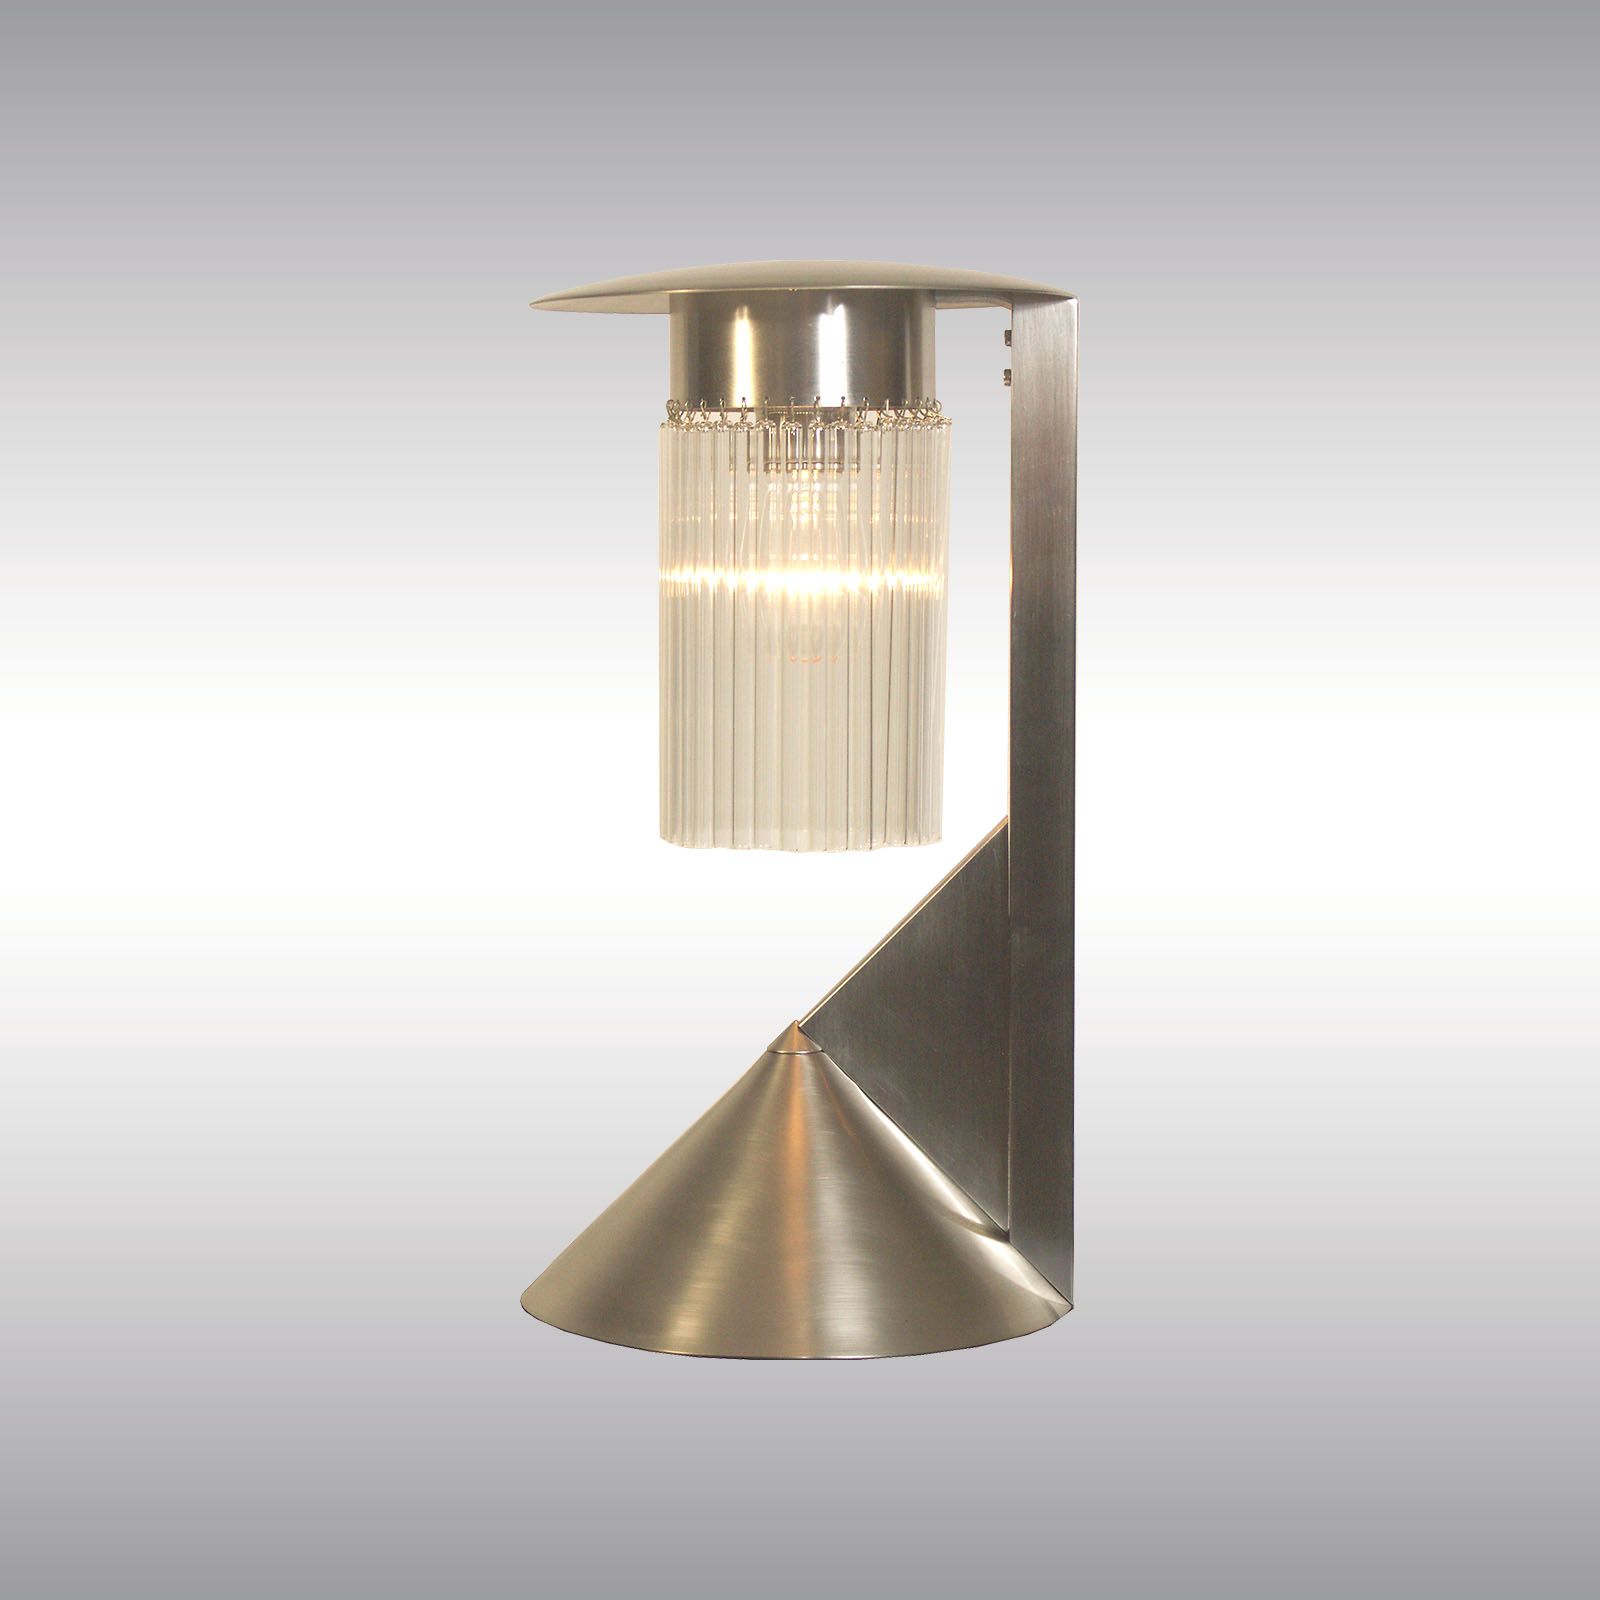 WOKA LAMPS VIENNA - OrderNr.: 20315|Reininghaus - Design: Koloman (Kolo) Moser